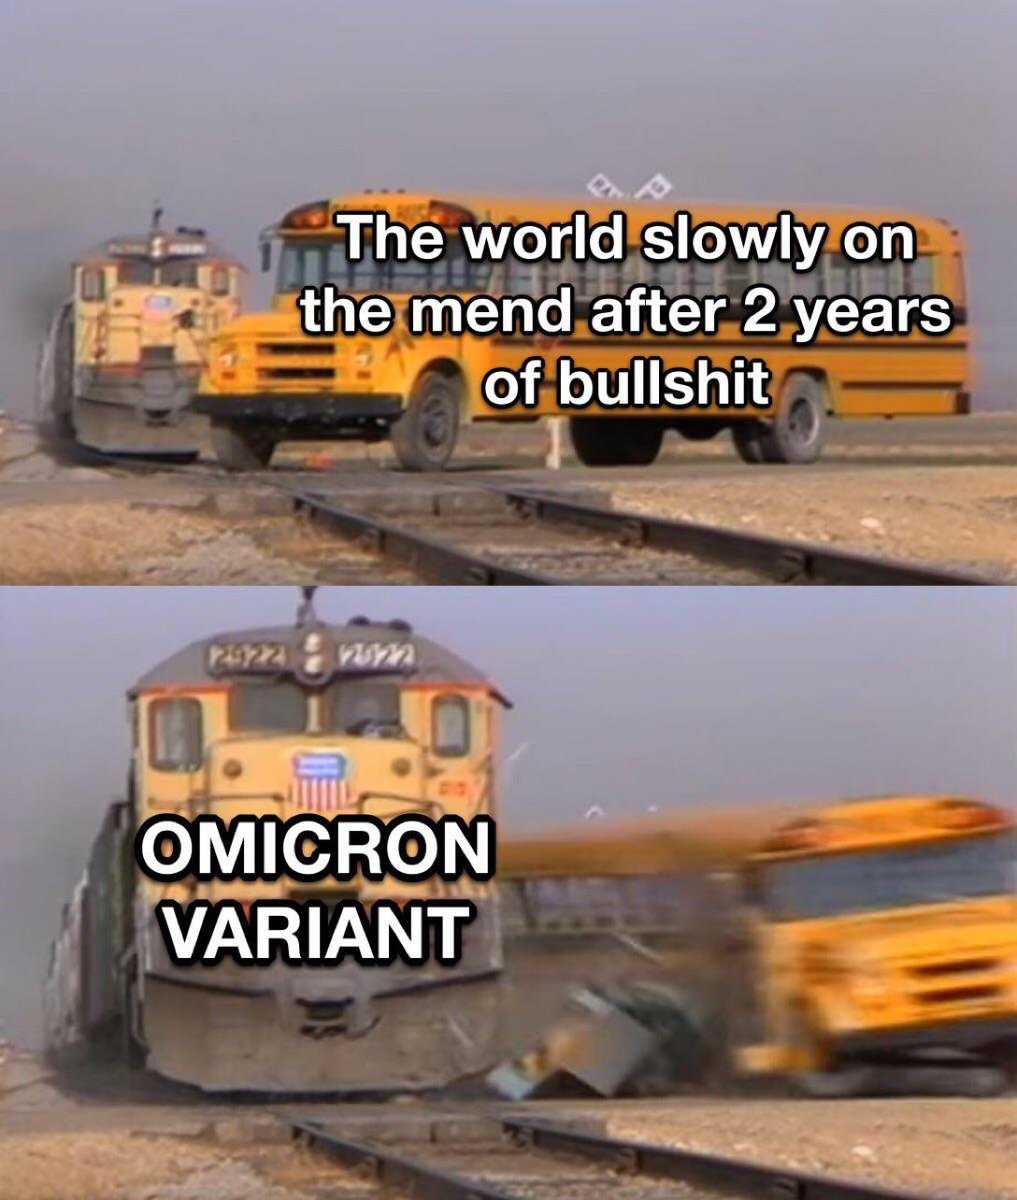 omicron memes